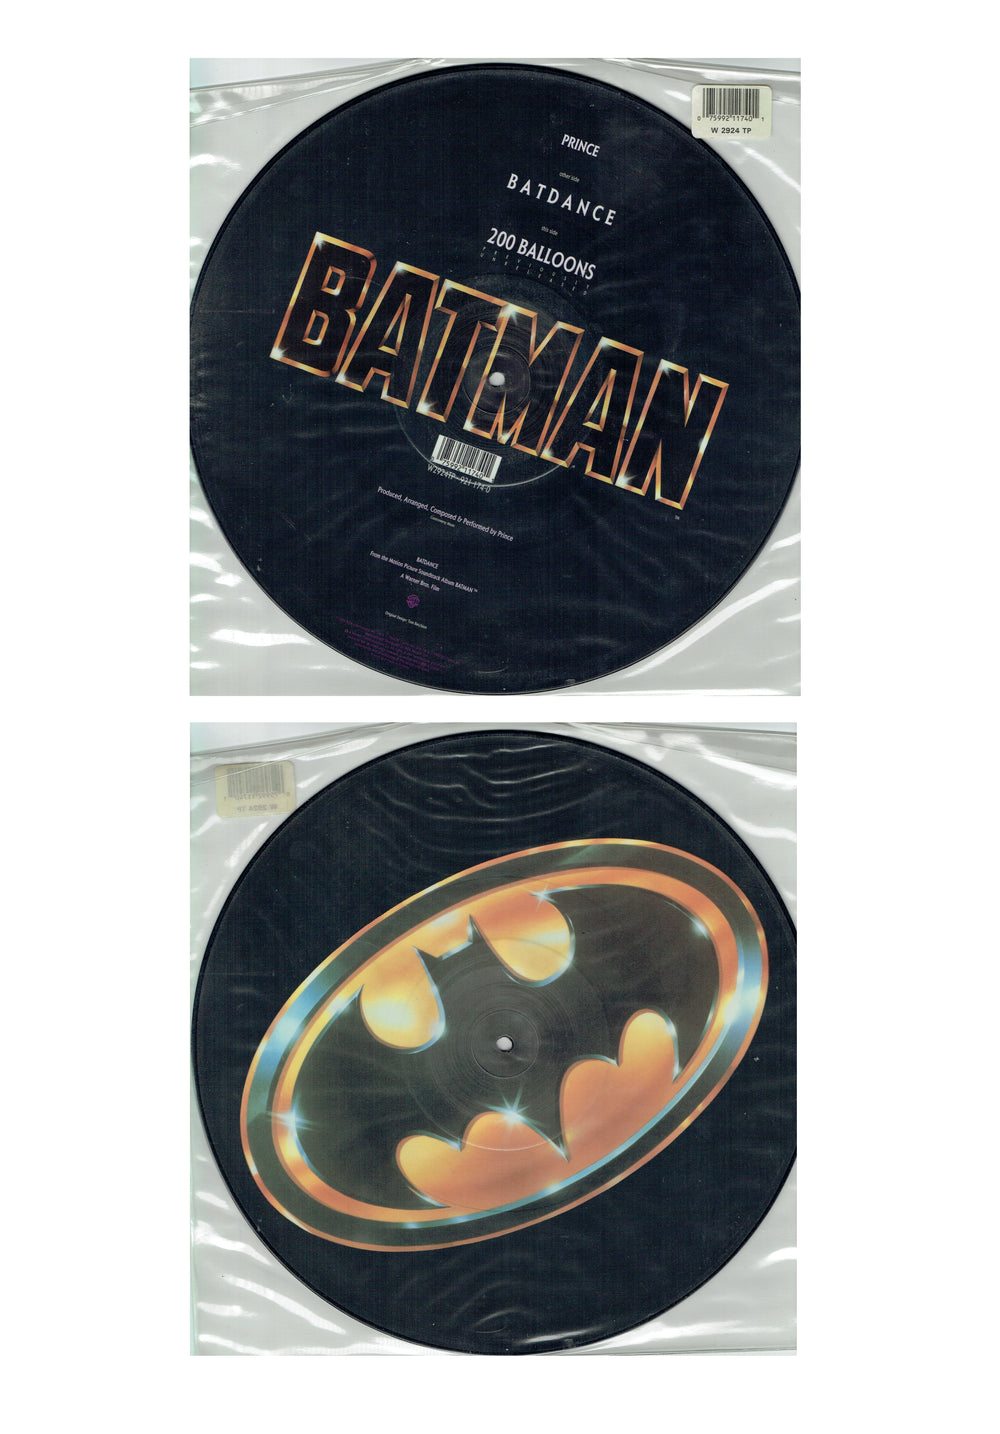 Prince – Batdance 200 Balloons Vinyl 12 Single Picture Disc UK Preloved NM 1989